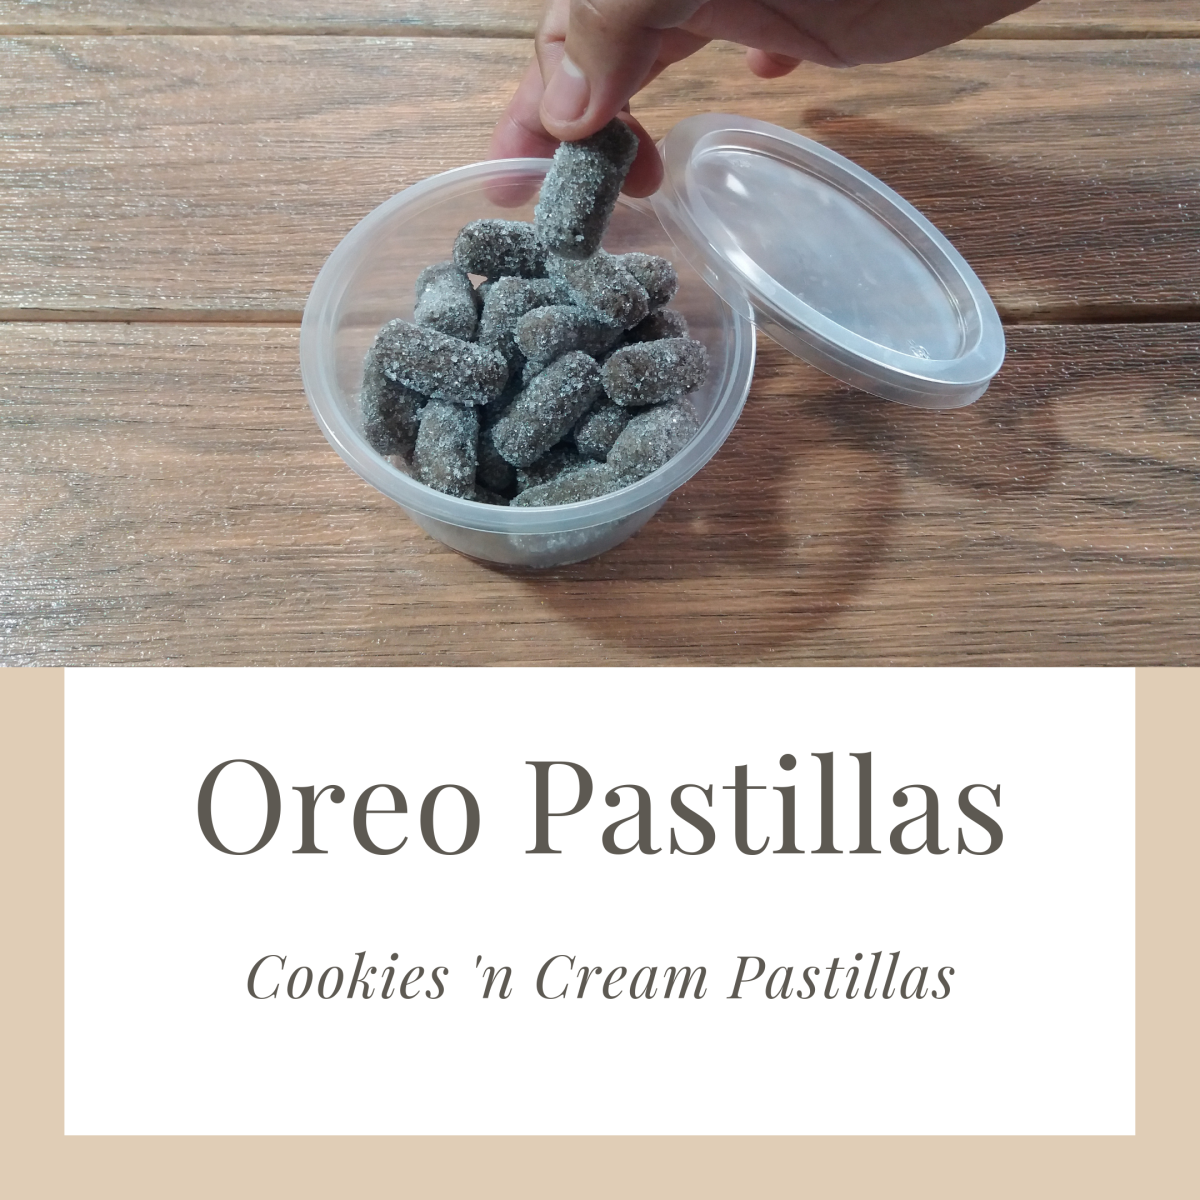 How to Make Oreo Pastillas